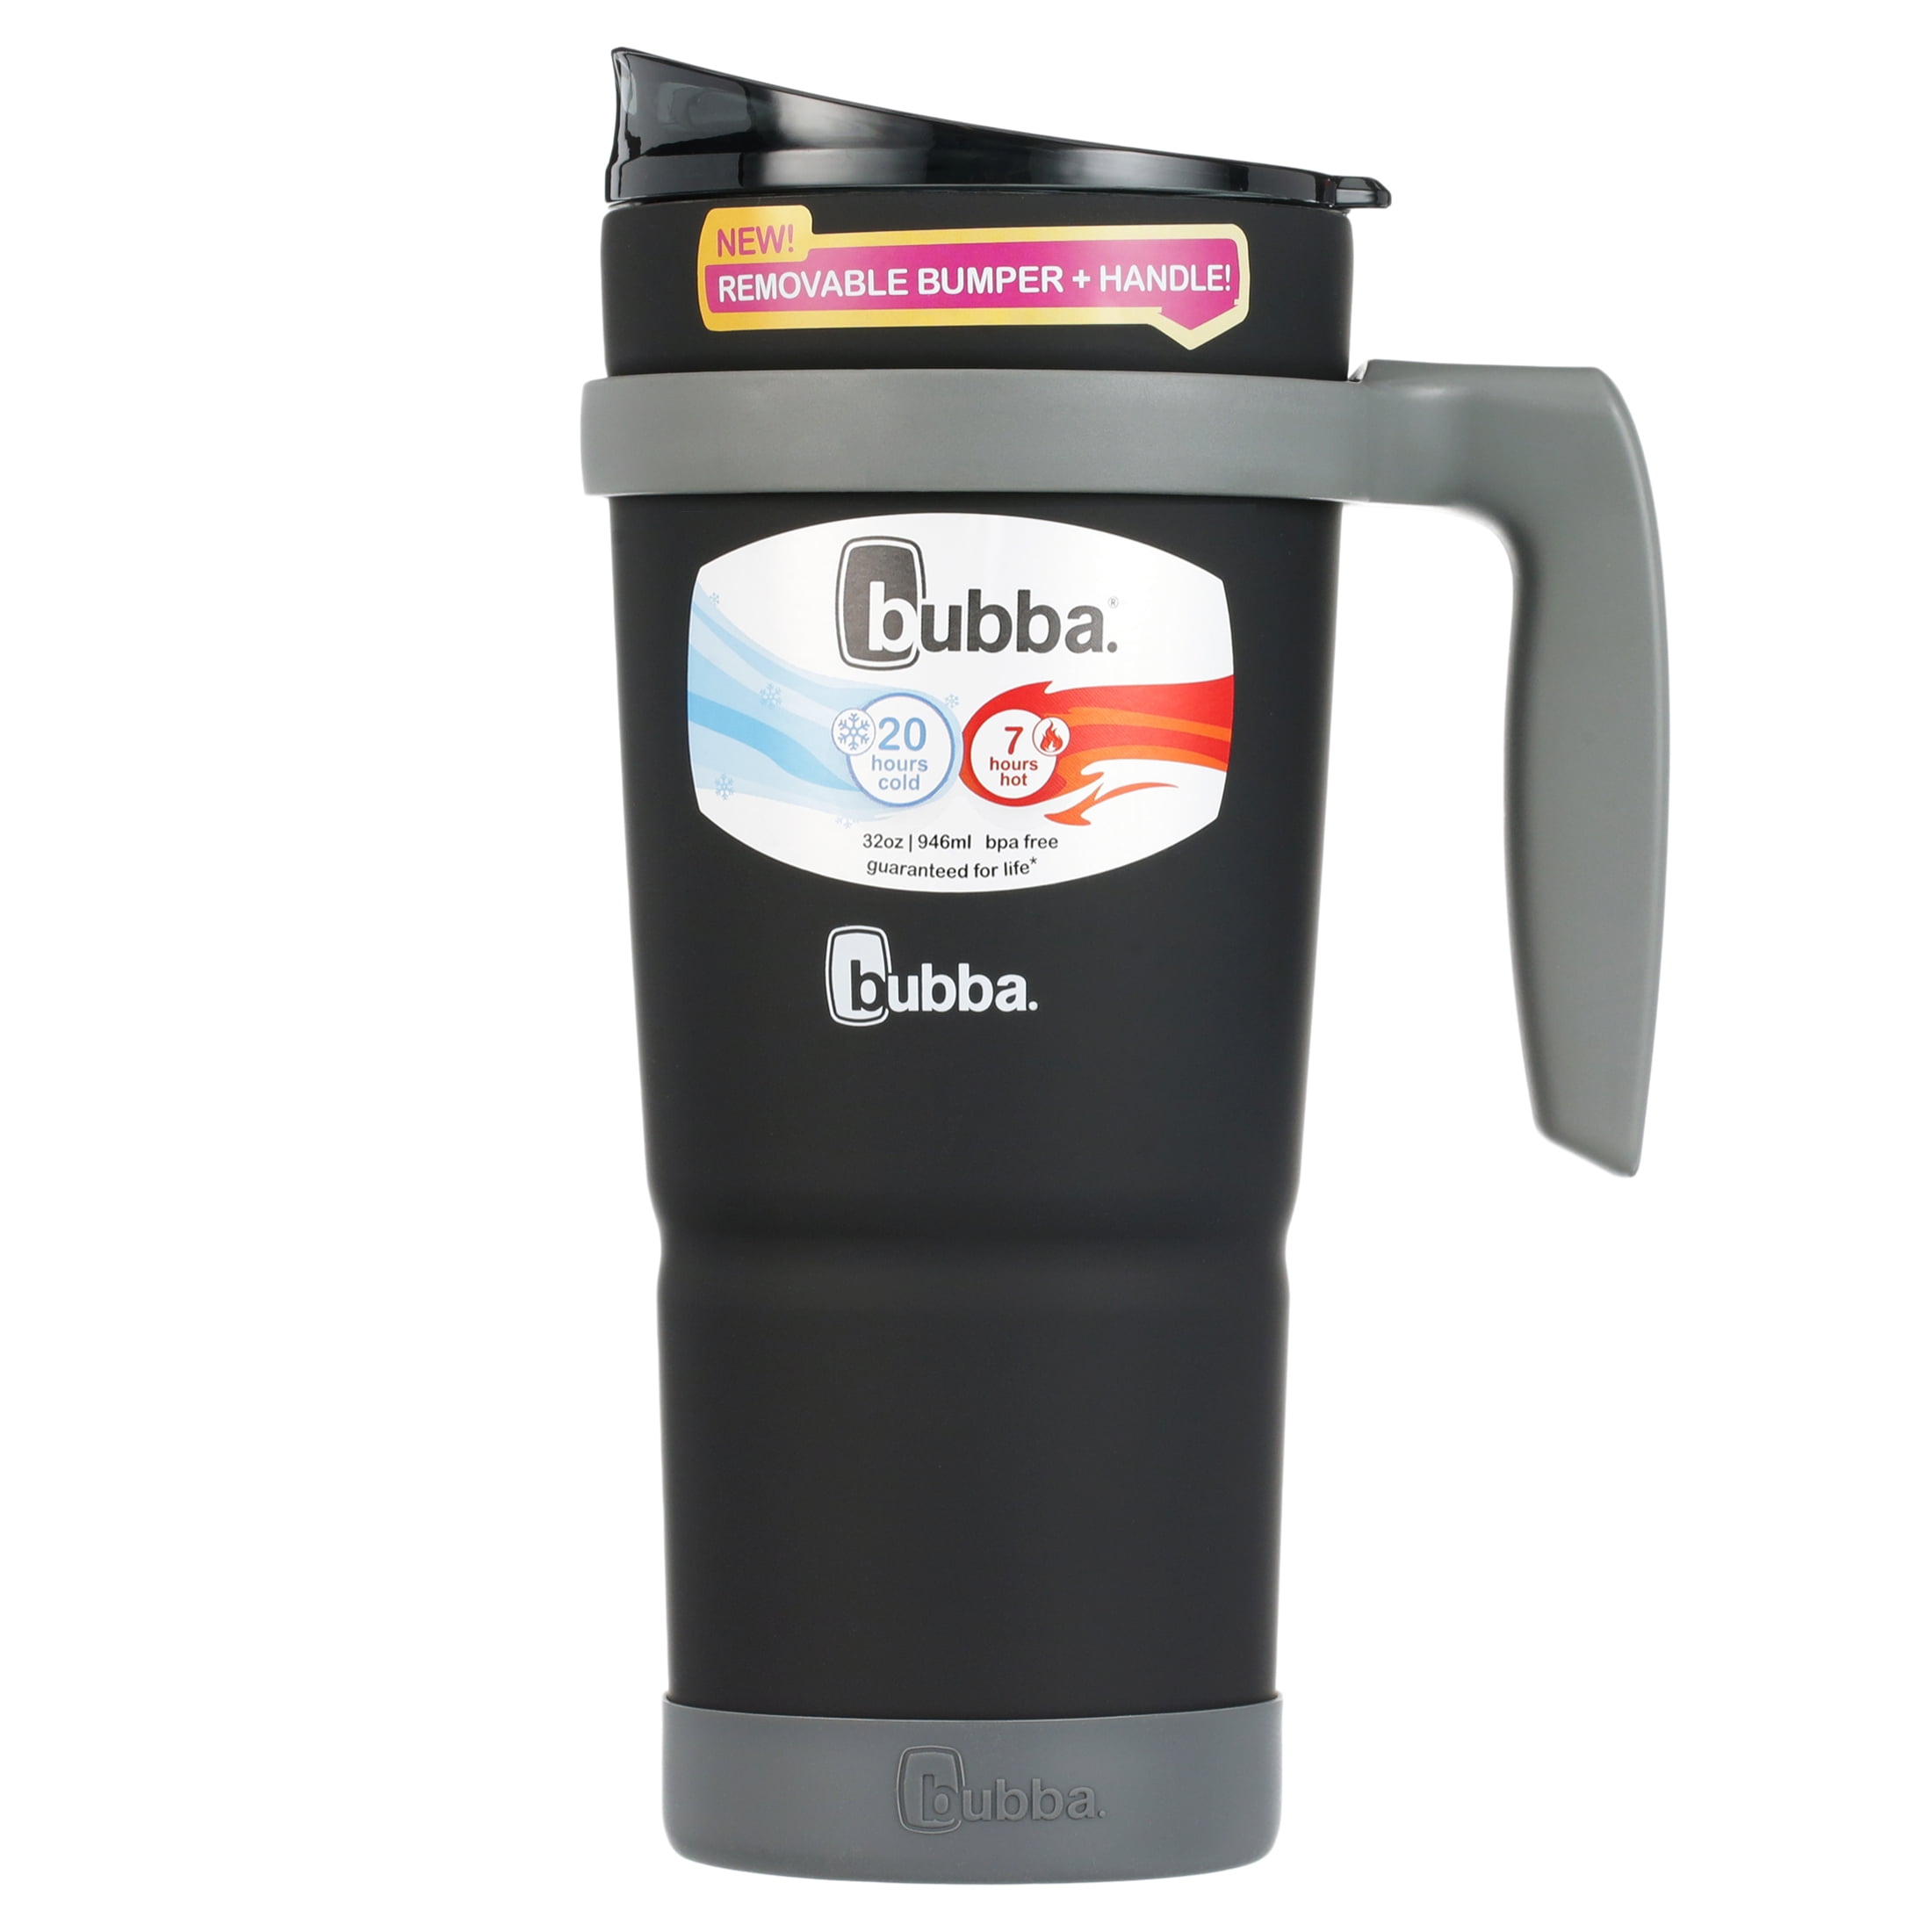 BUBU 40 oz Tumbler with Handle and Metal Straw – BUBU Store Miami